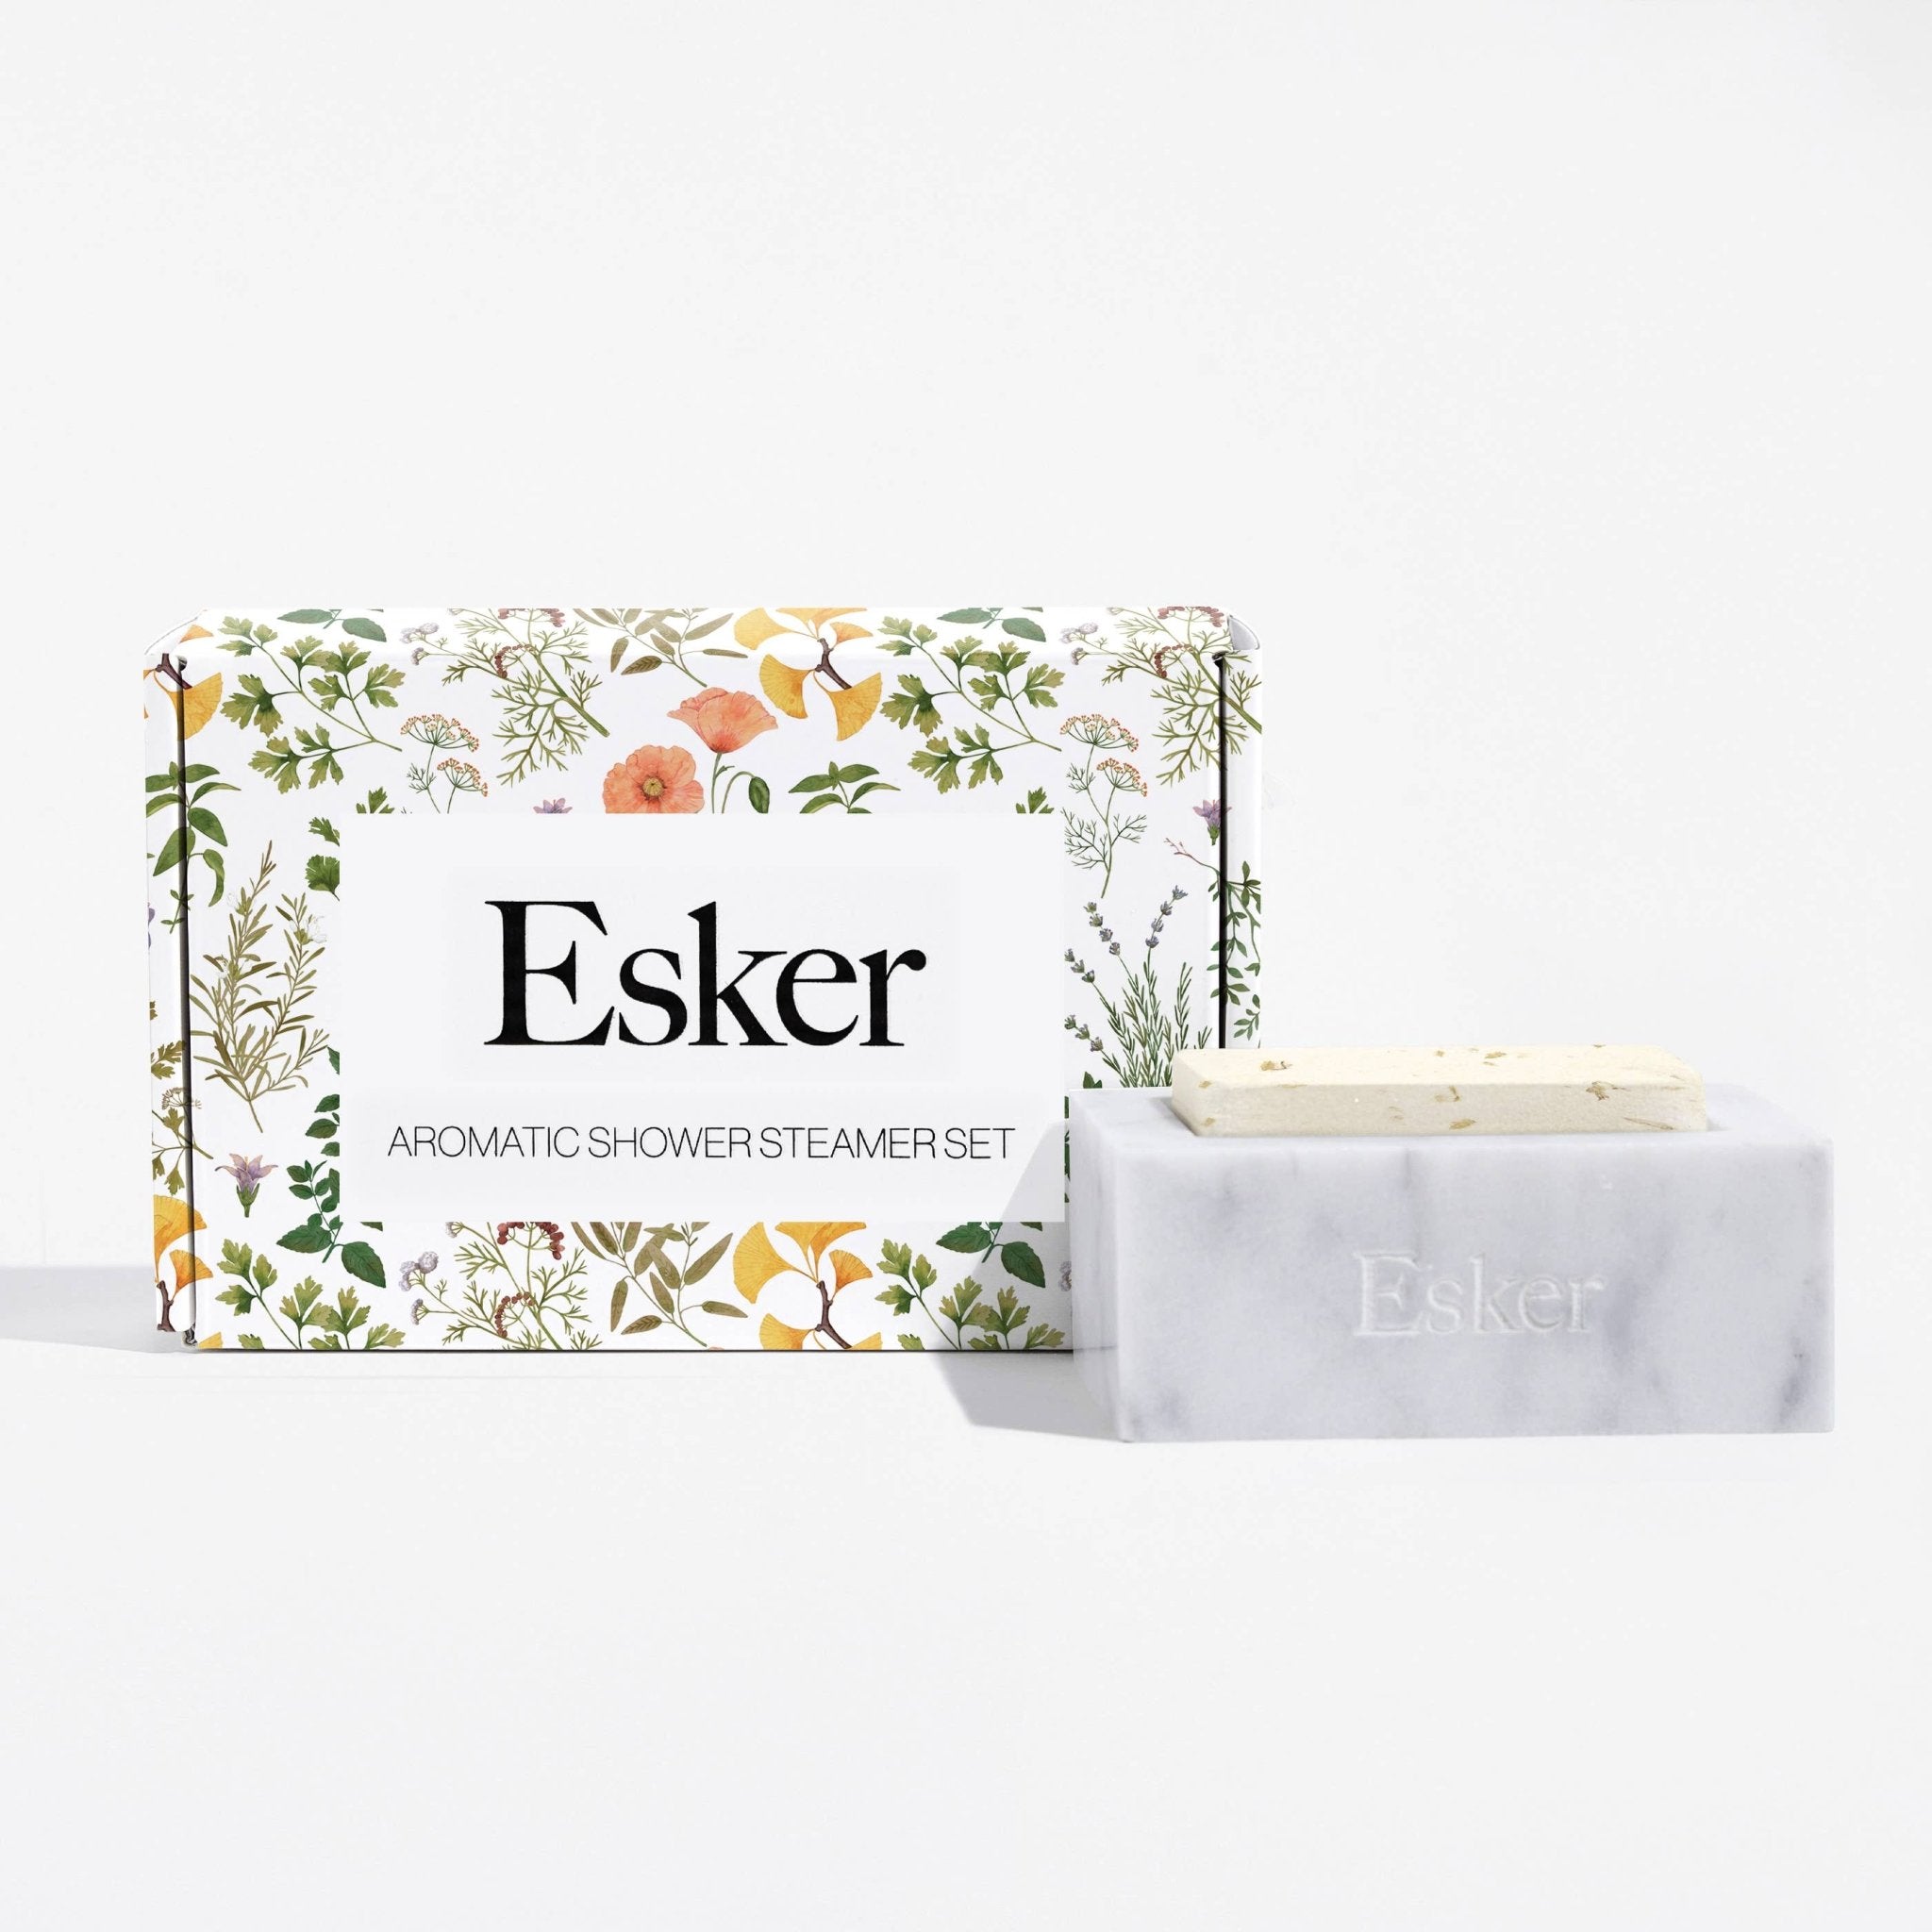 Aromatic Shower Steamer Set by Esker